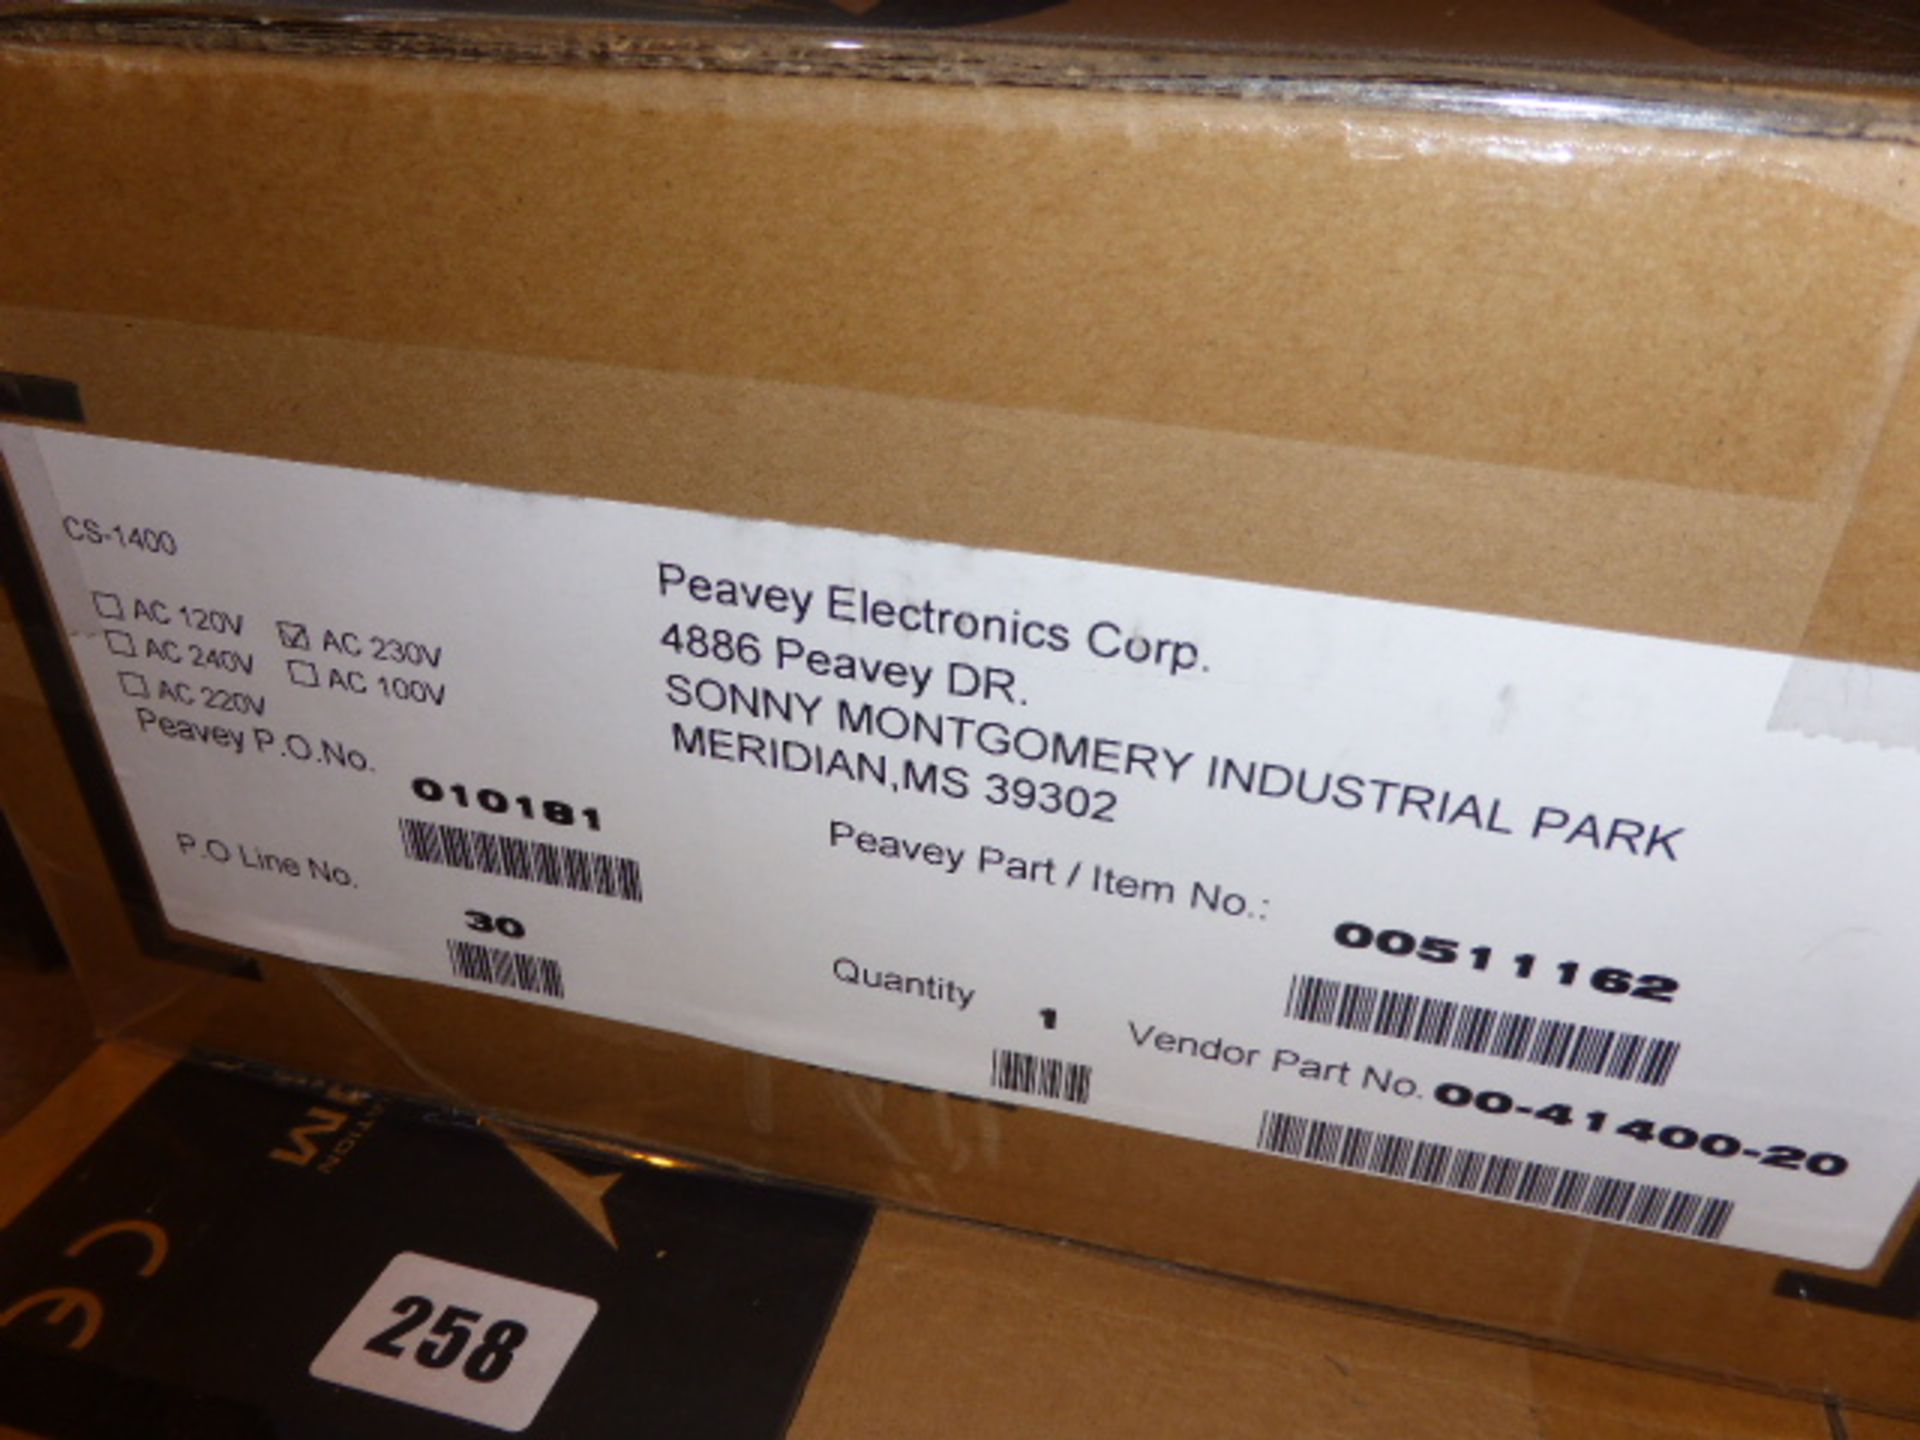 Peavey CS1400 Power amplifier in original box - Image 2 of 2